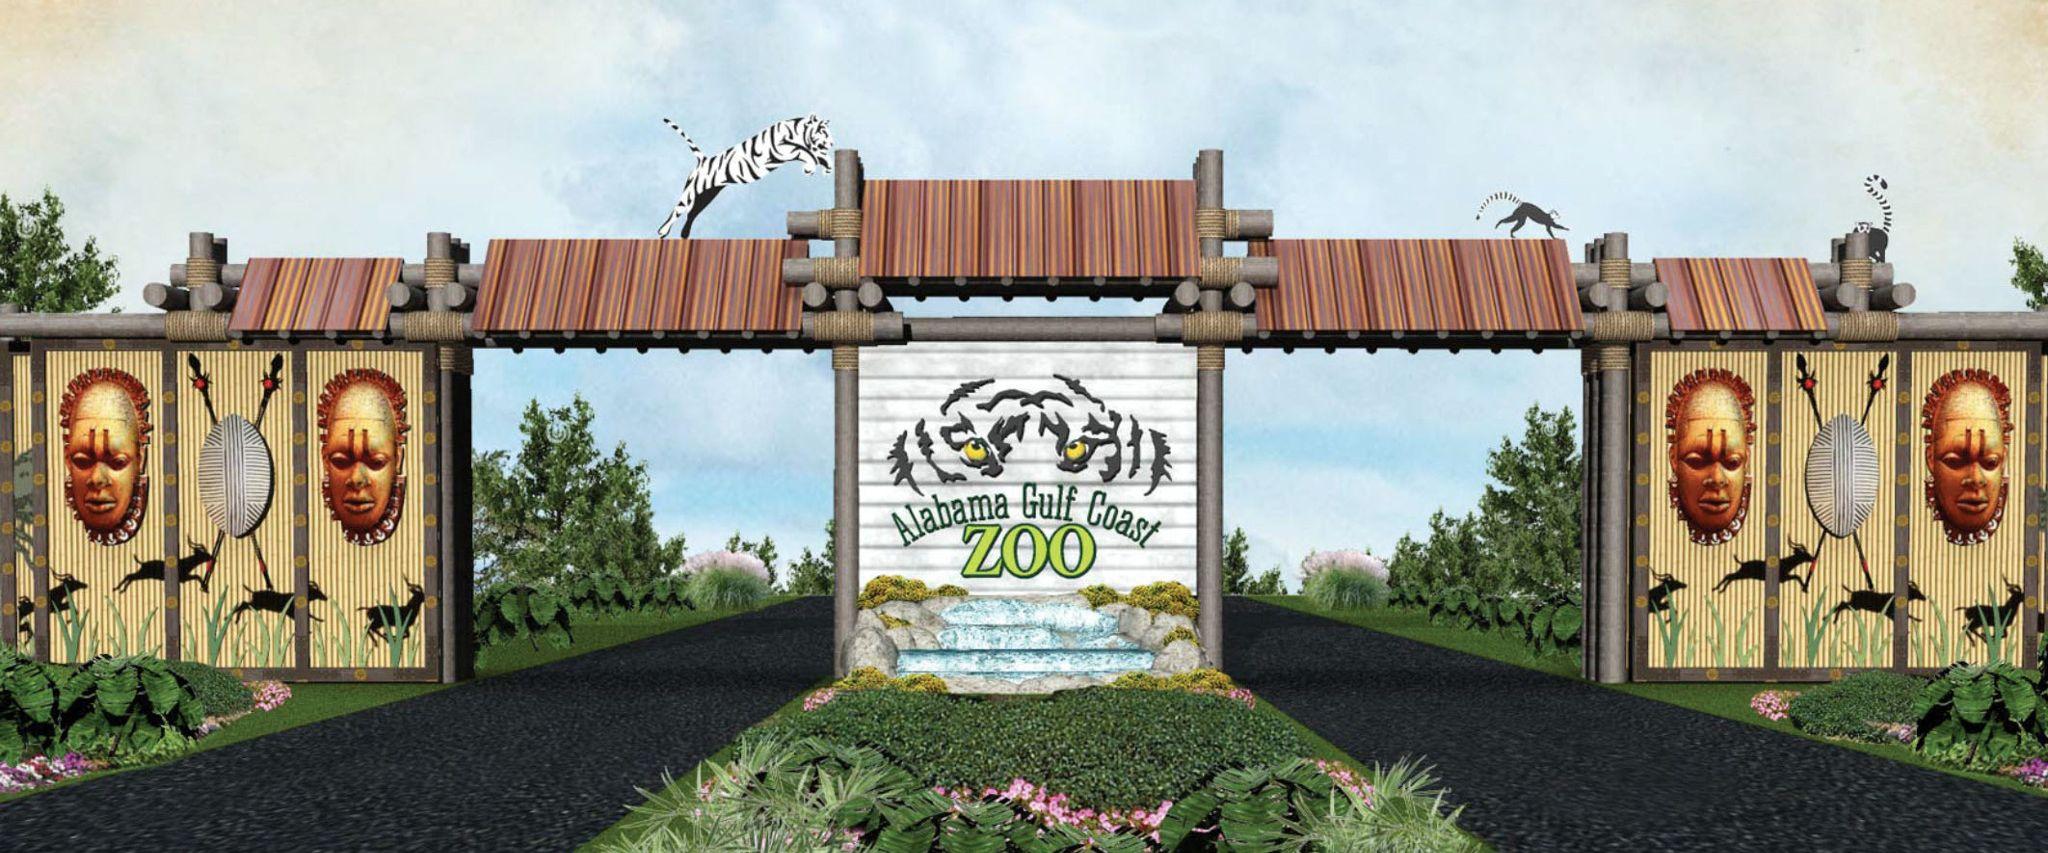 Main entrance to Alabama Gulf Coast Zoo in Gulf Shores, AL